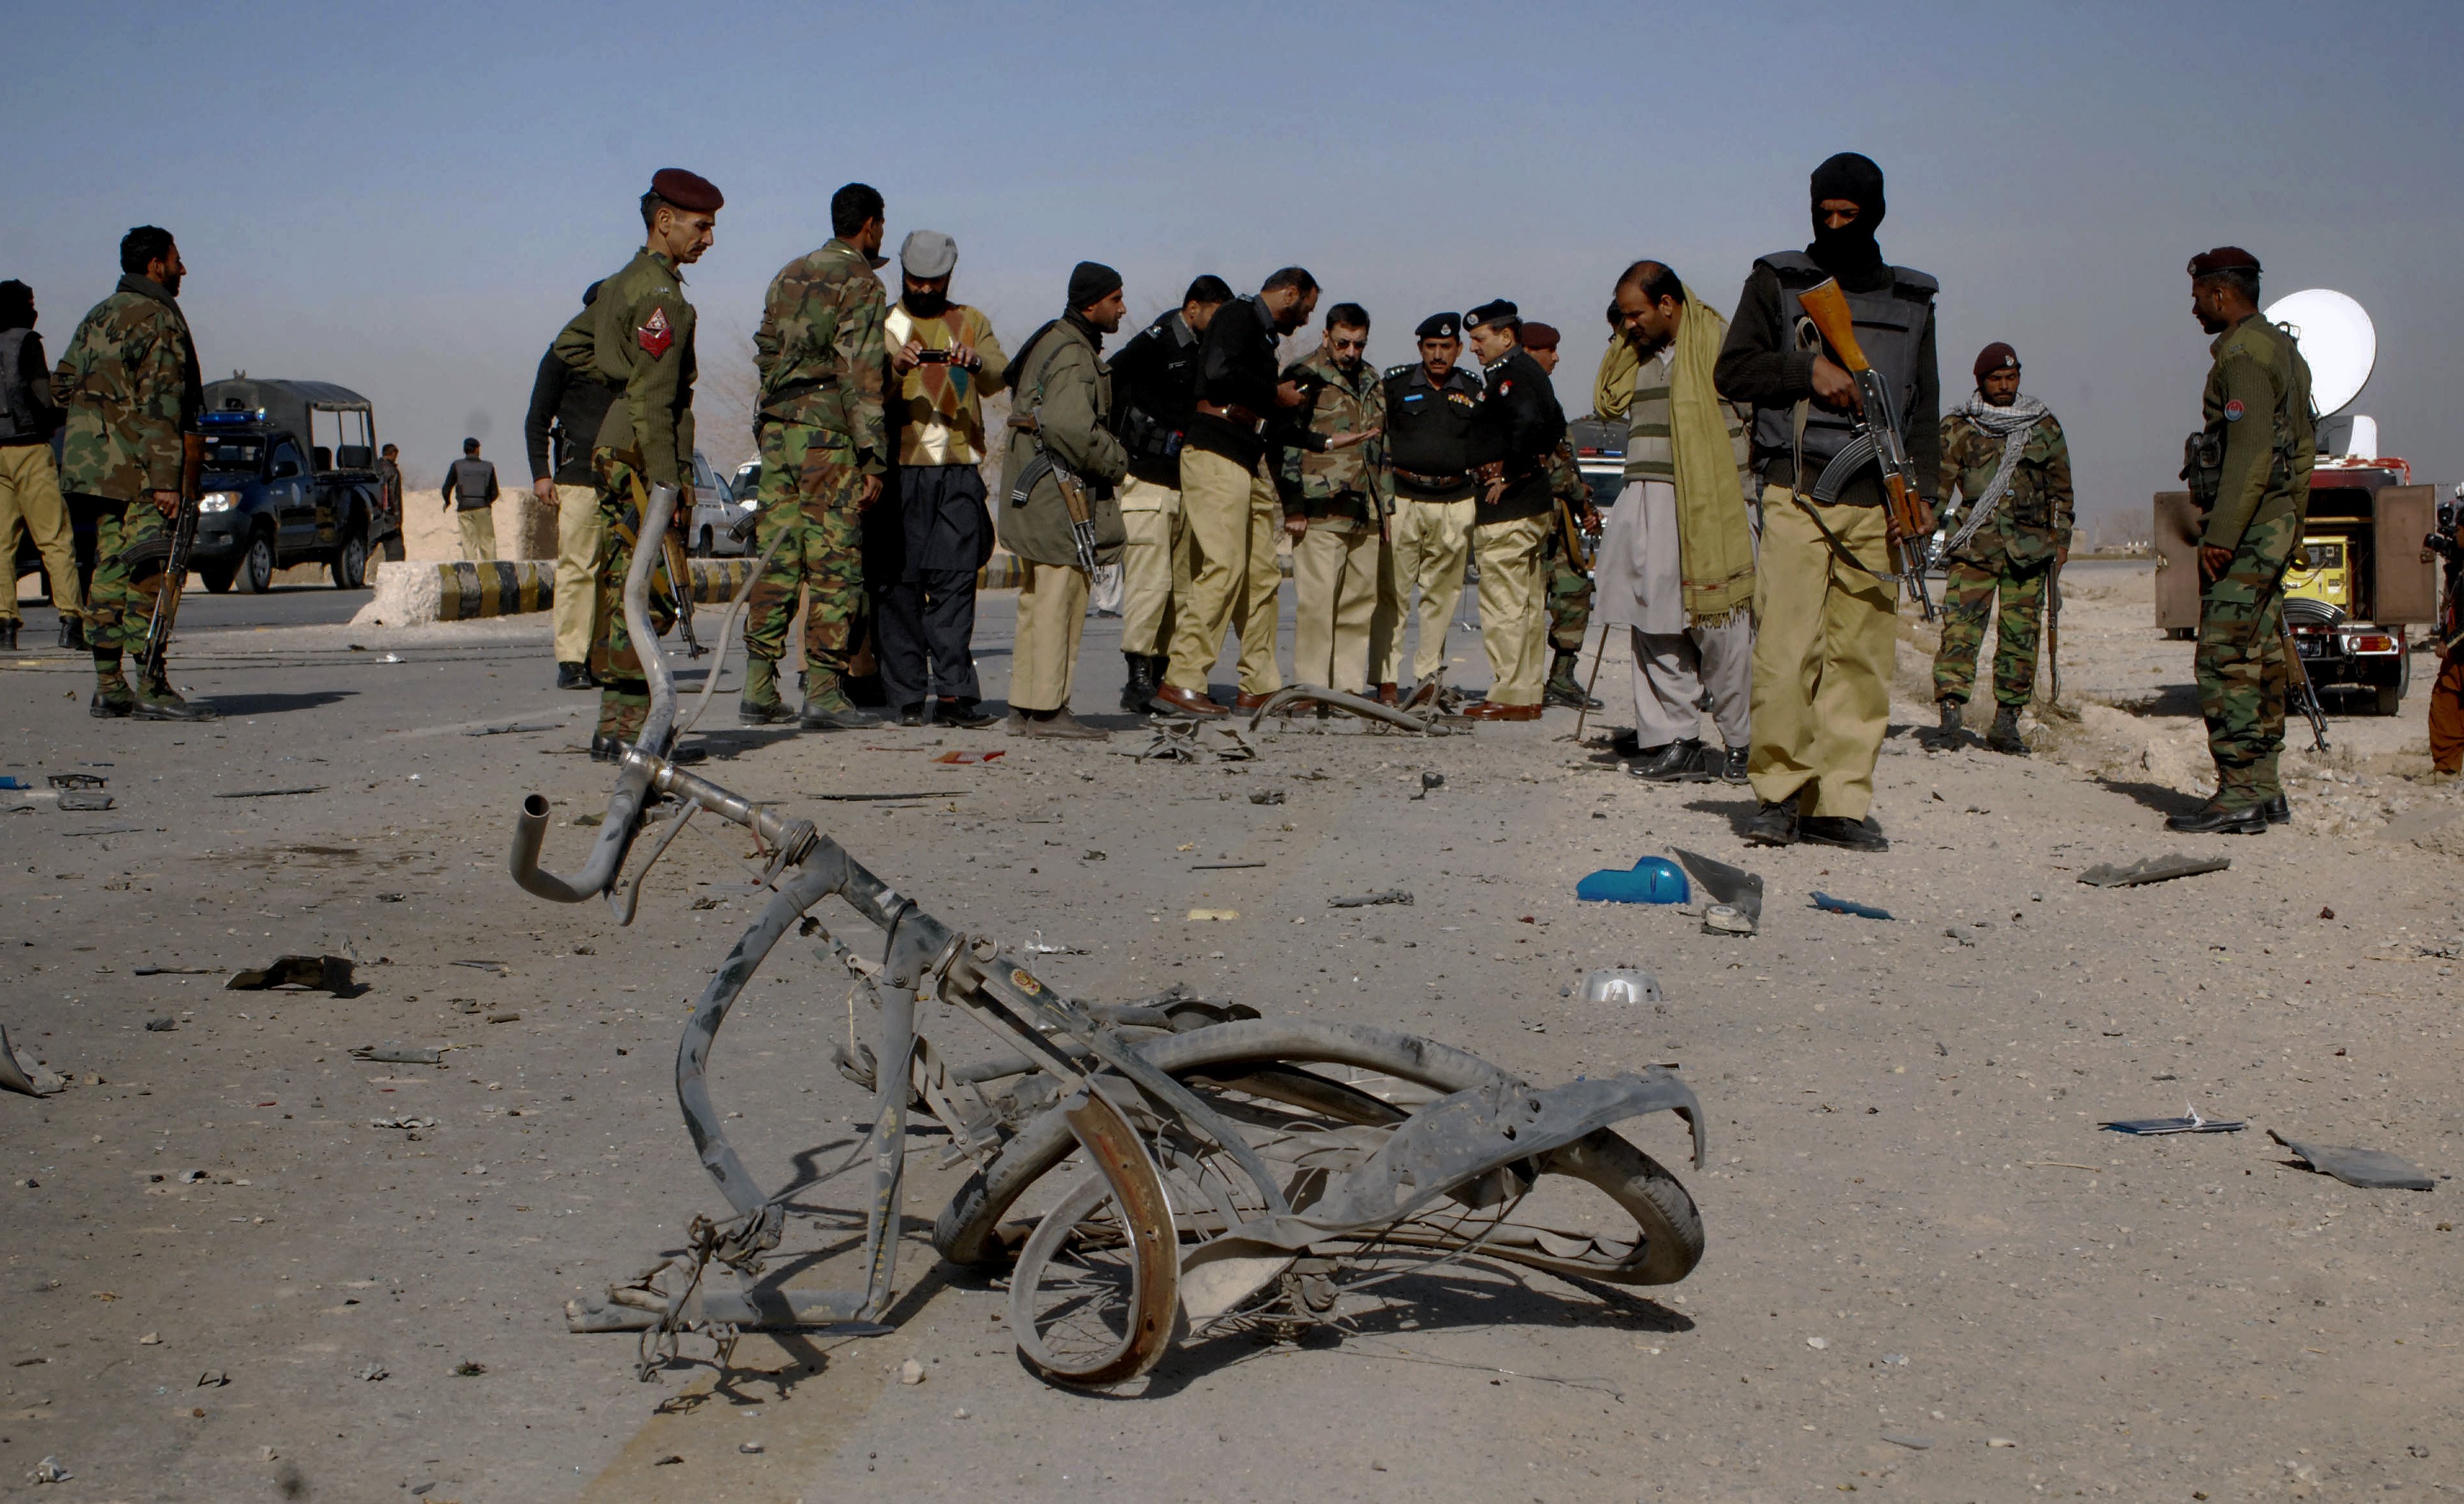 Brott och straff, Krig, Taliban, Pakistan, Soldat, Afghanistan